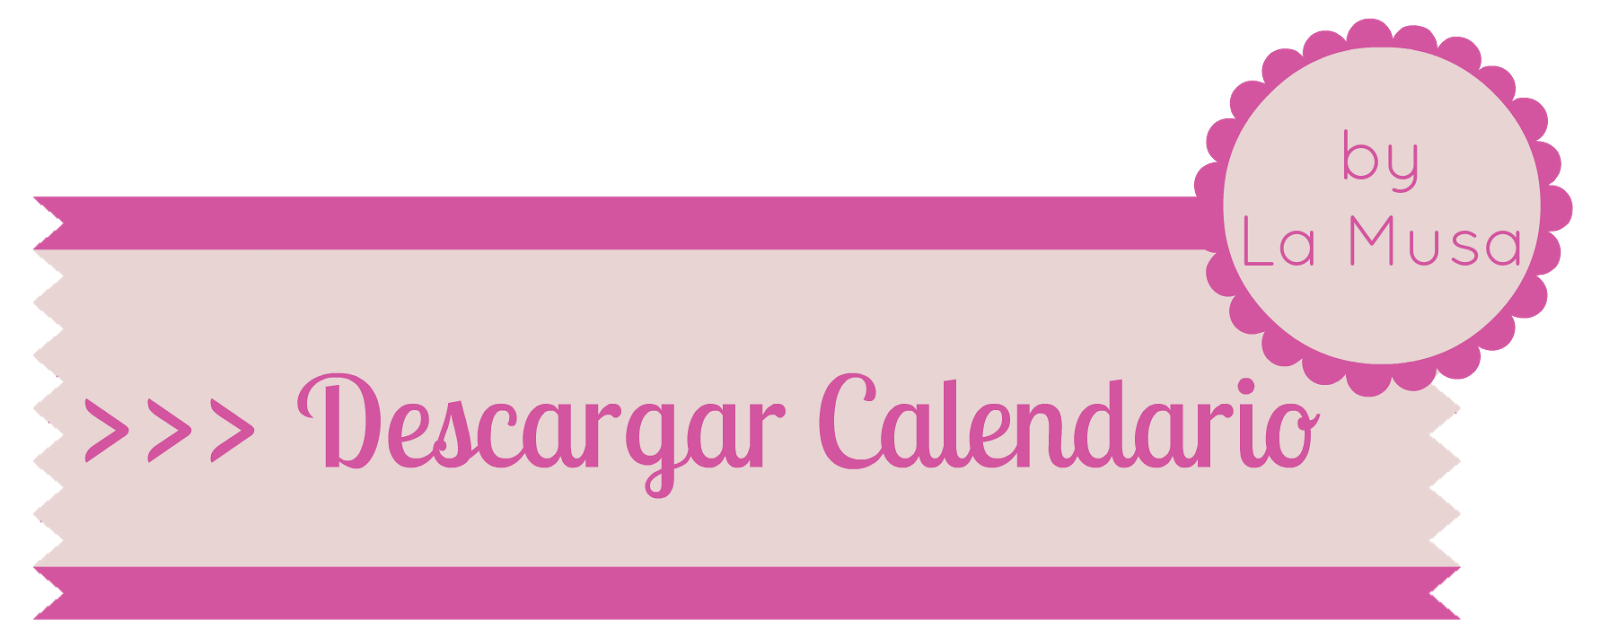 Descargar Calendario, La Musa Decoración, calendar, calendario, freebie, 2014